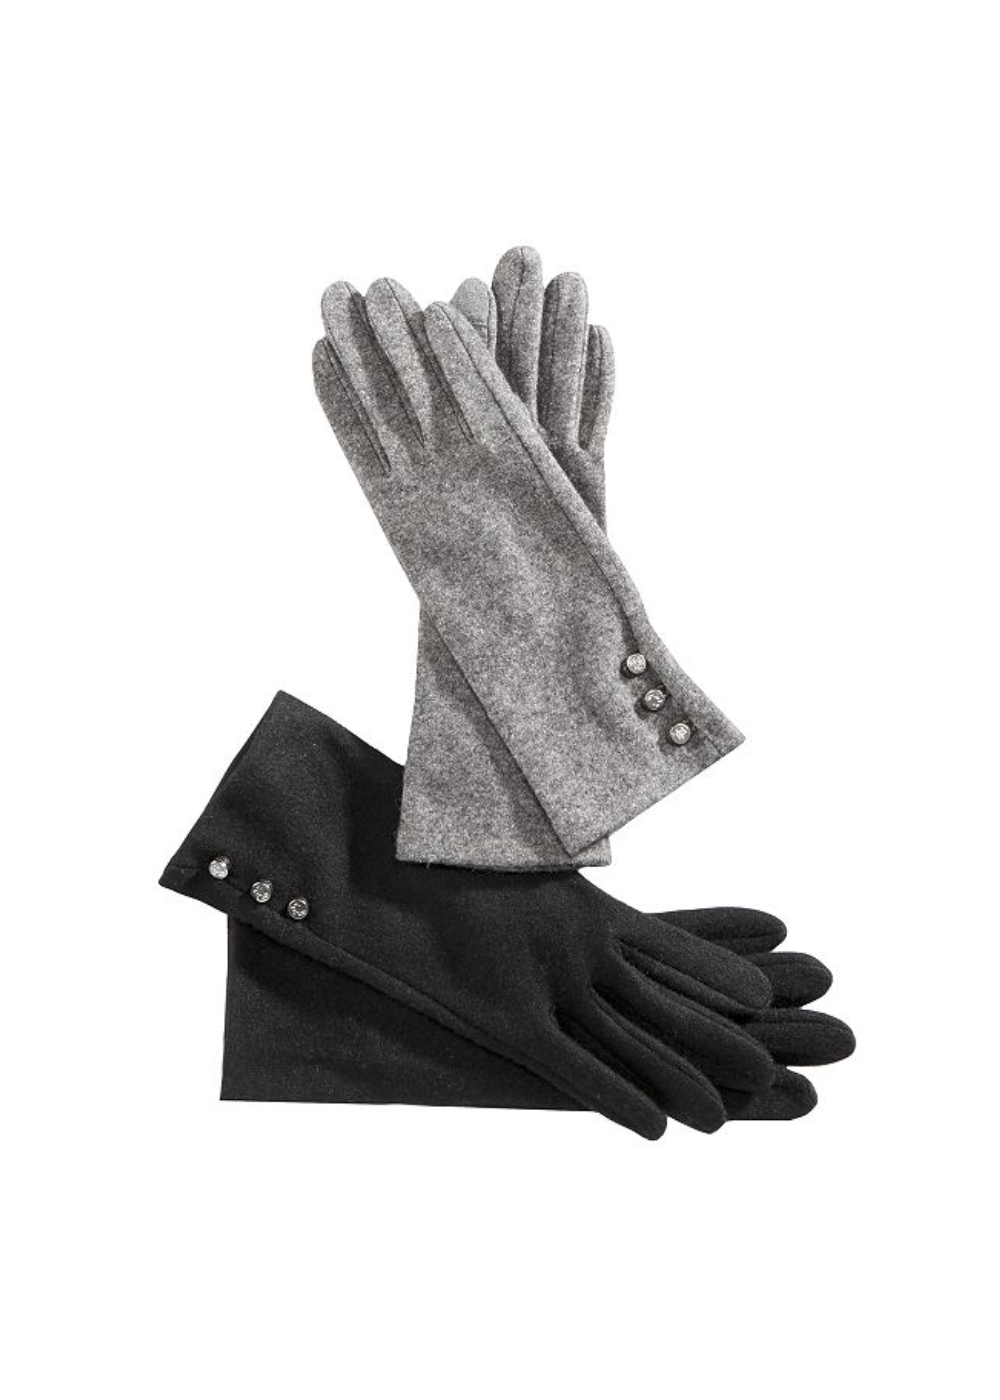 ralph lauren touch gloves